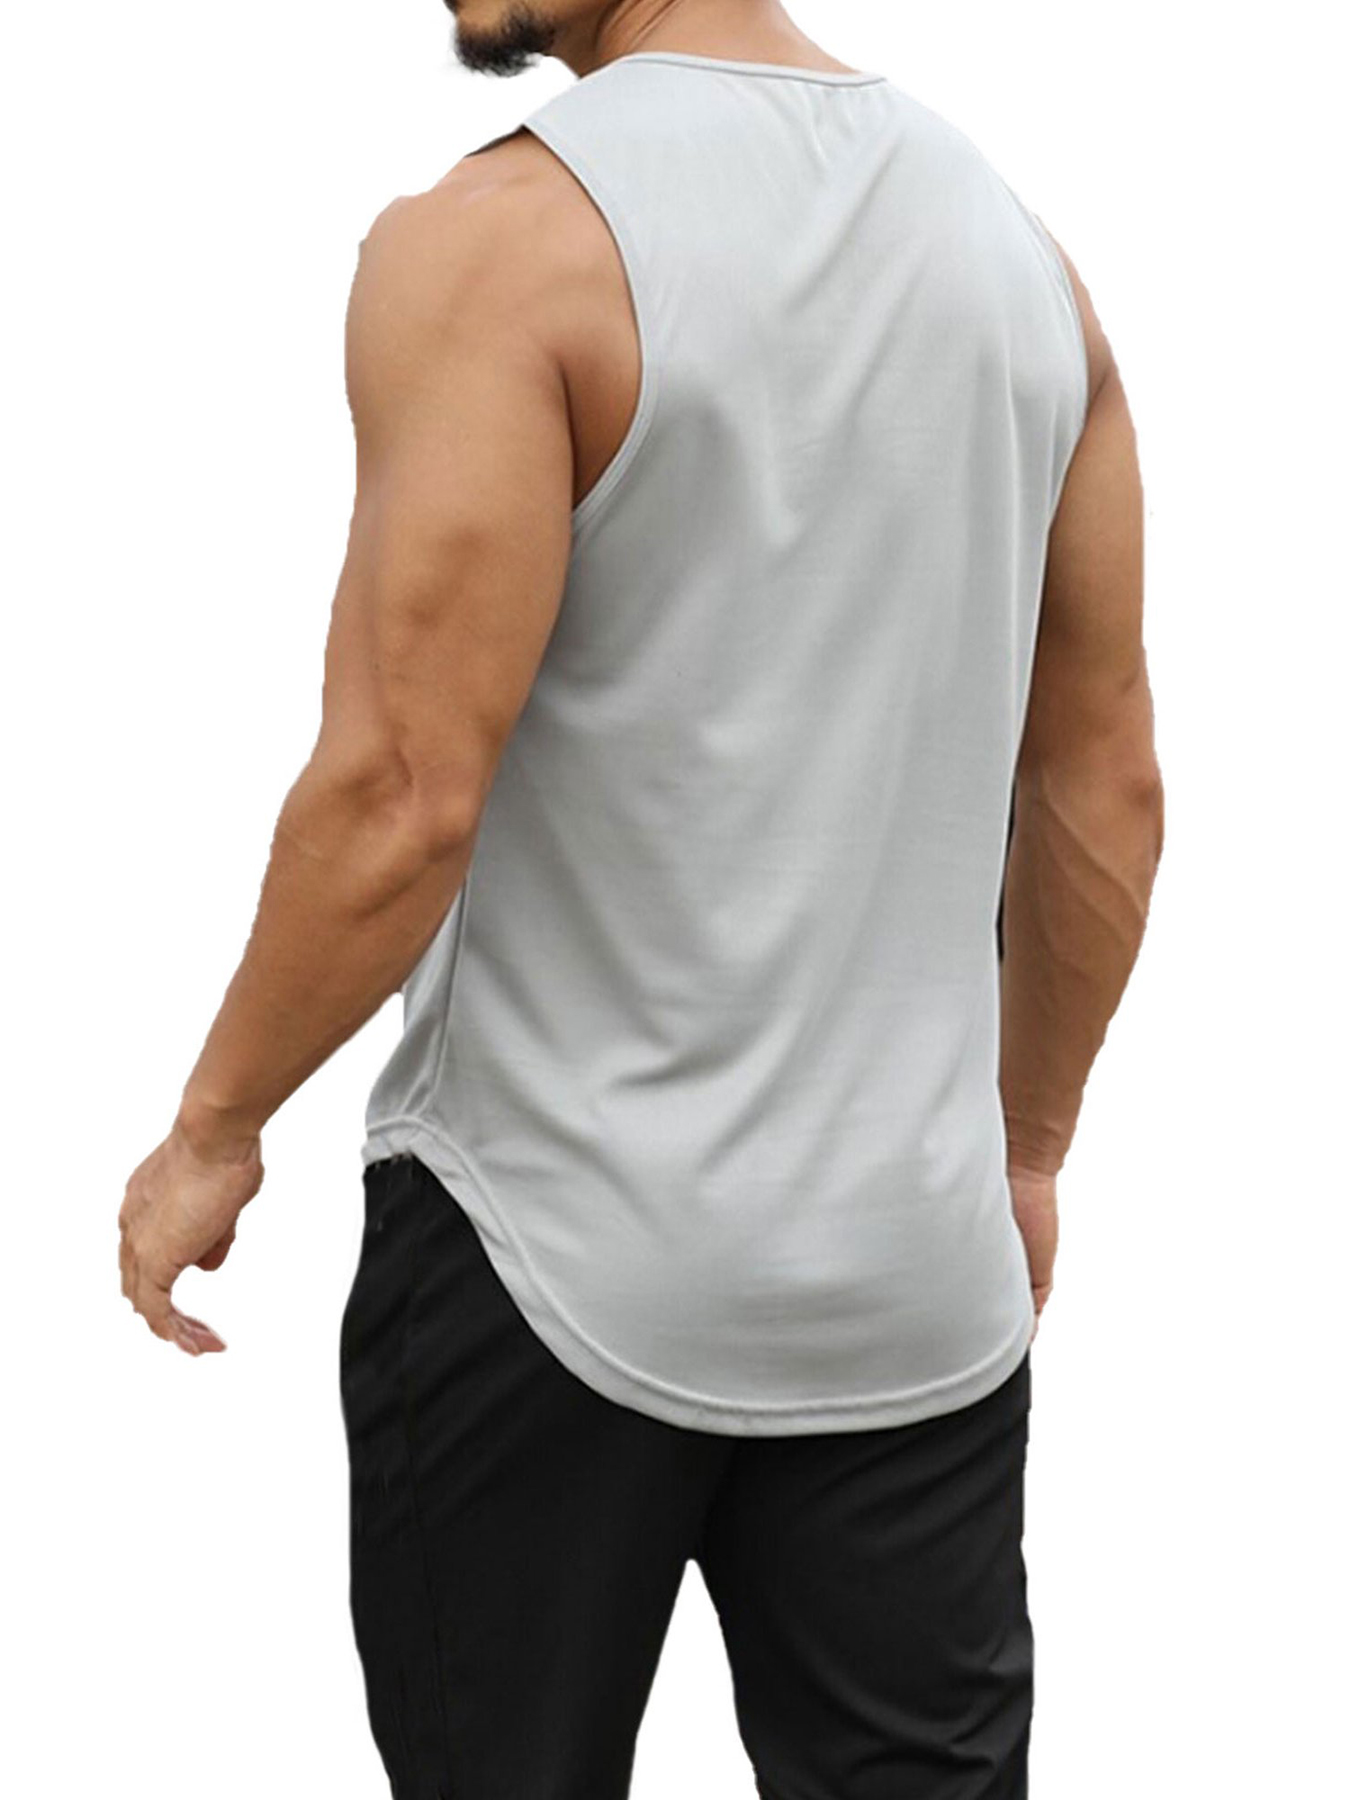 Hat and Beyond Camiseta deportiva sin mangas para hombre, para boxeo,  gimnasio, entrenamiento